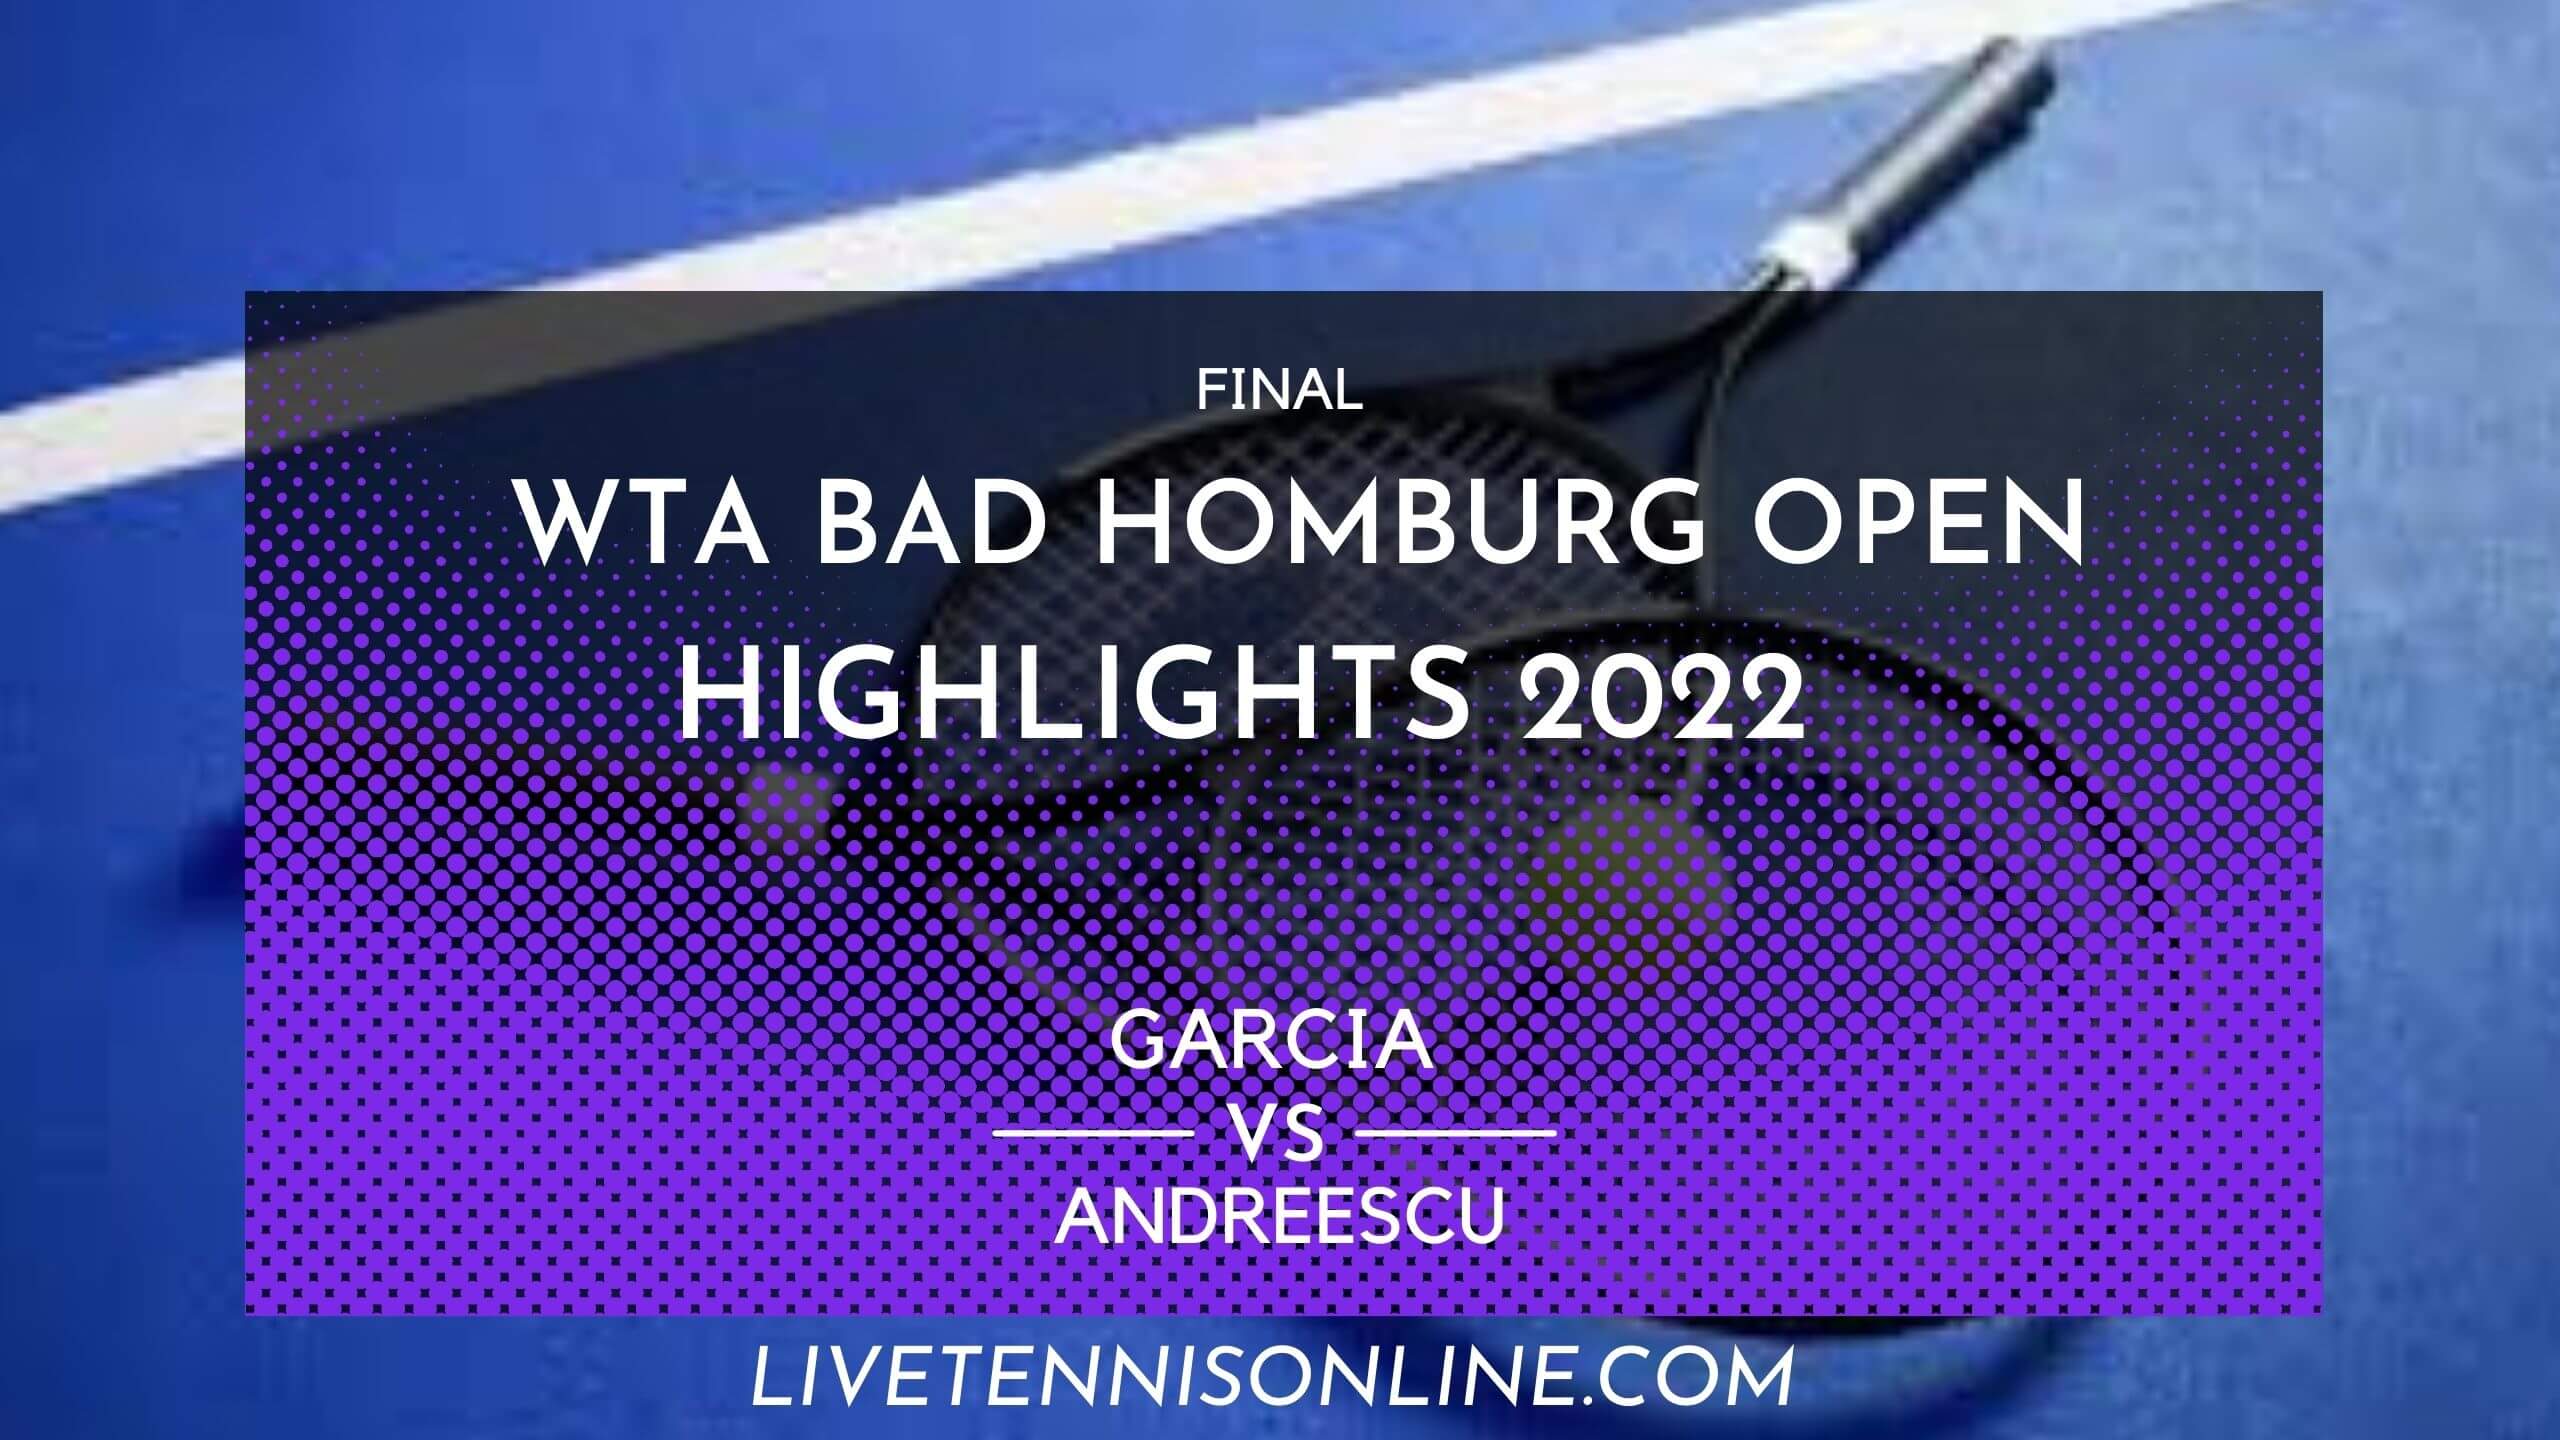 Andreescu Vs Garcia Final Highlights 2022 Homburg Open